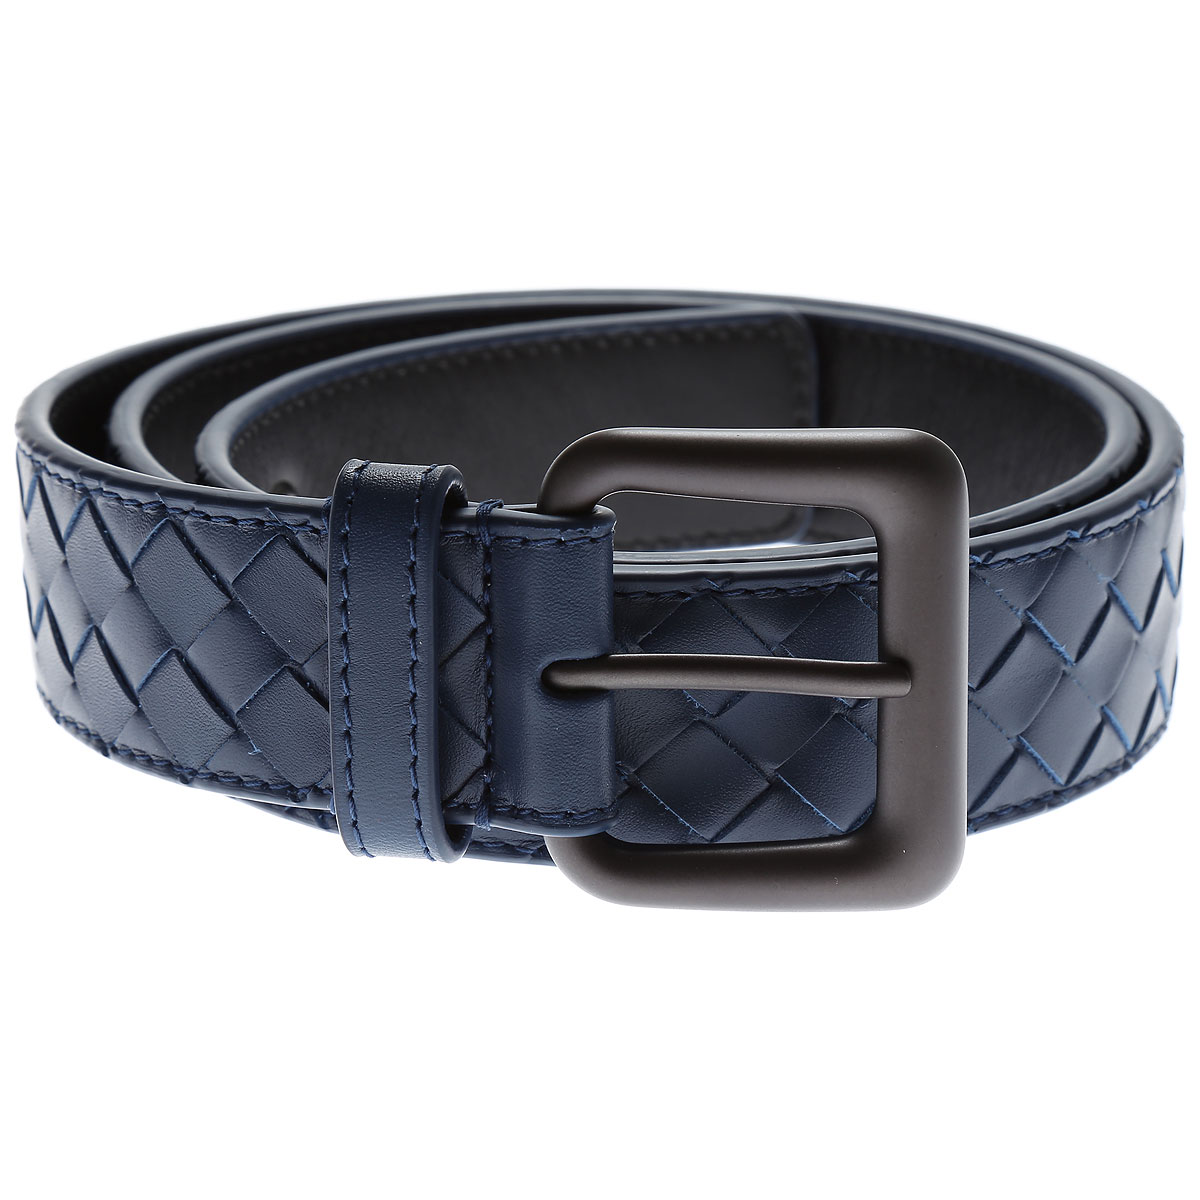 Mens Belts Bottega Veneta, Style code: 271932-v4650-41111